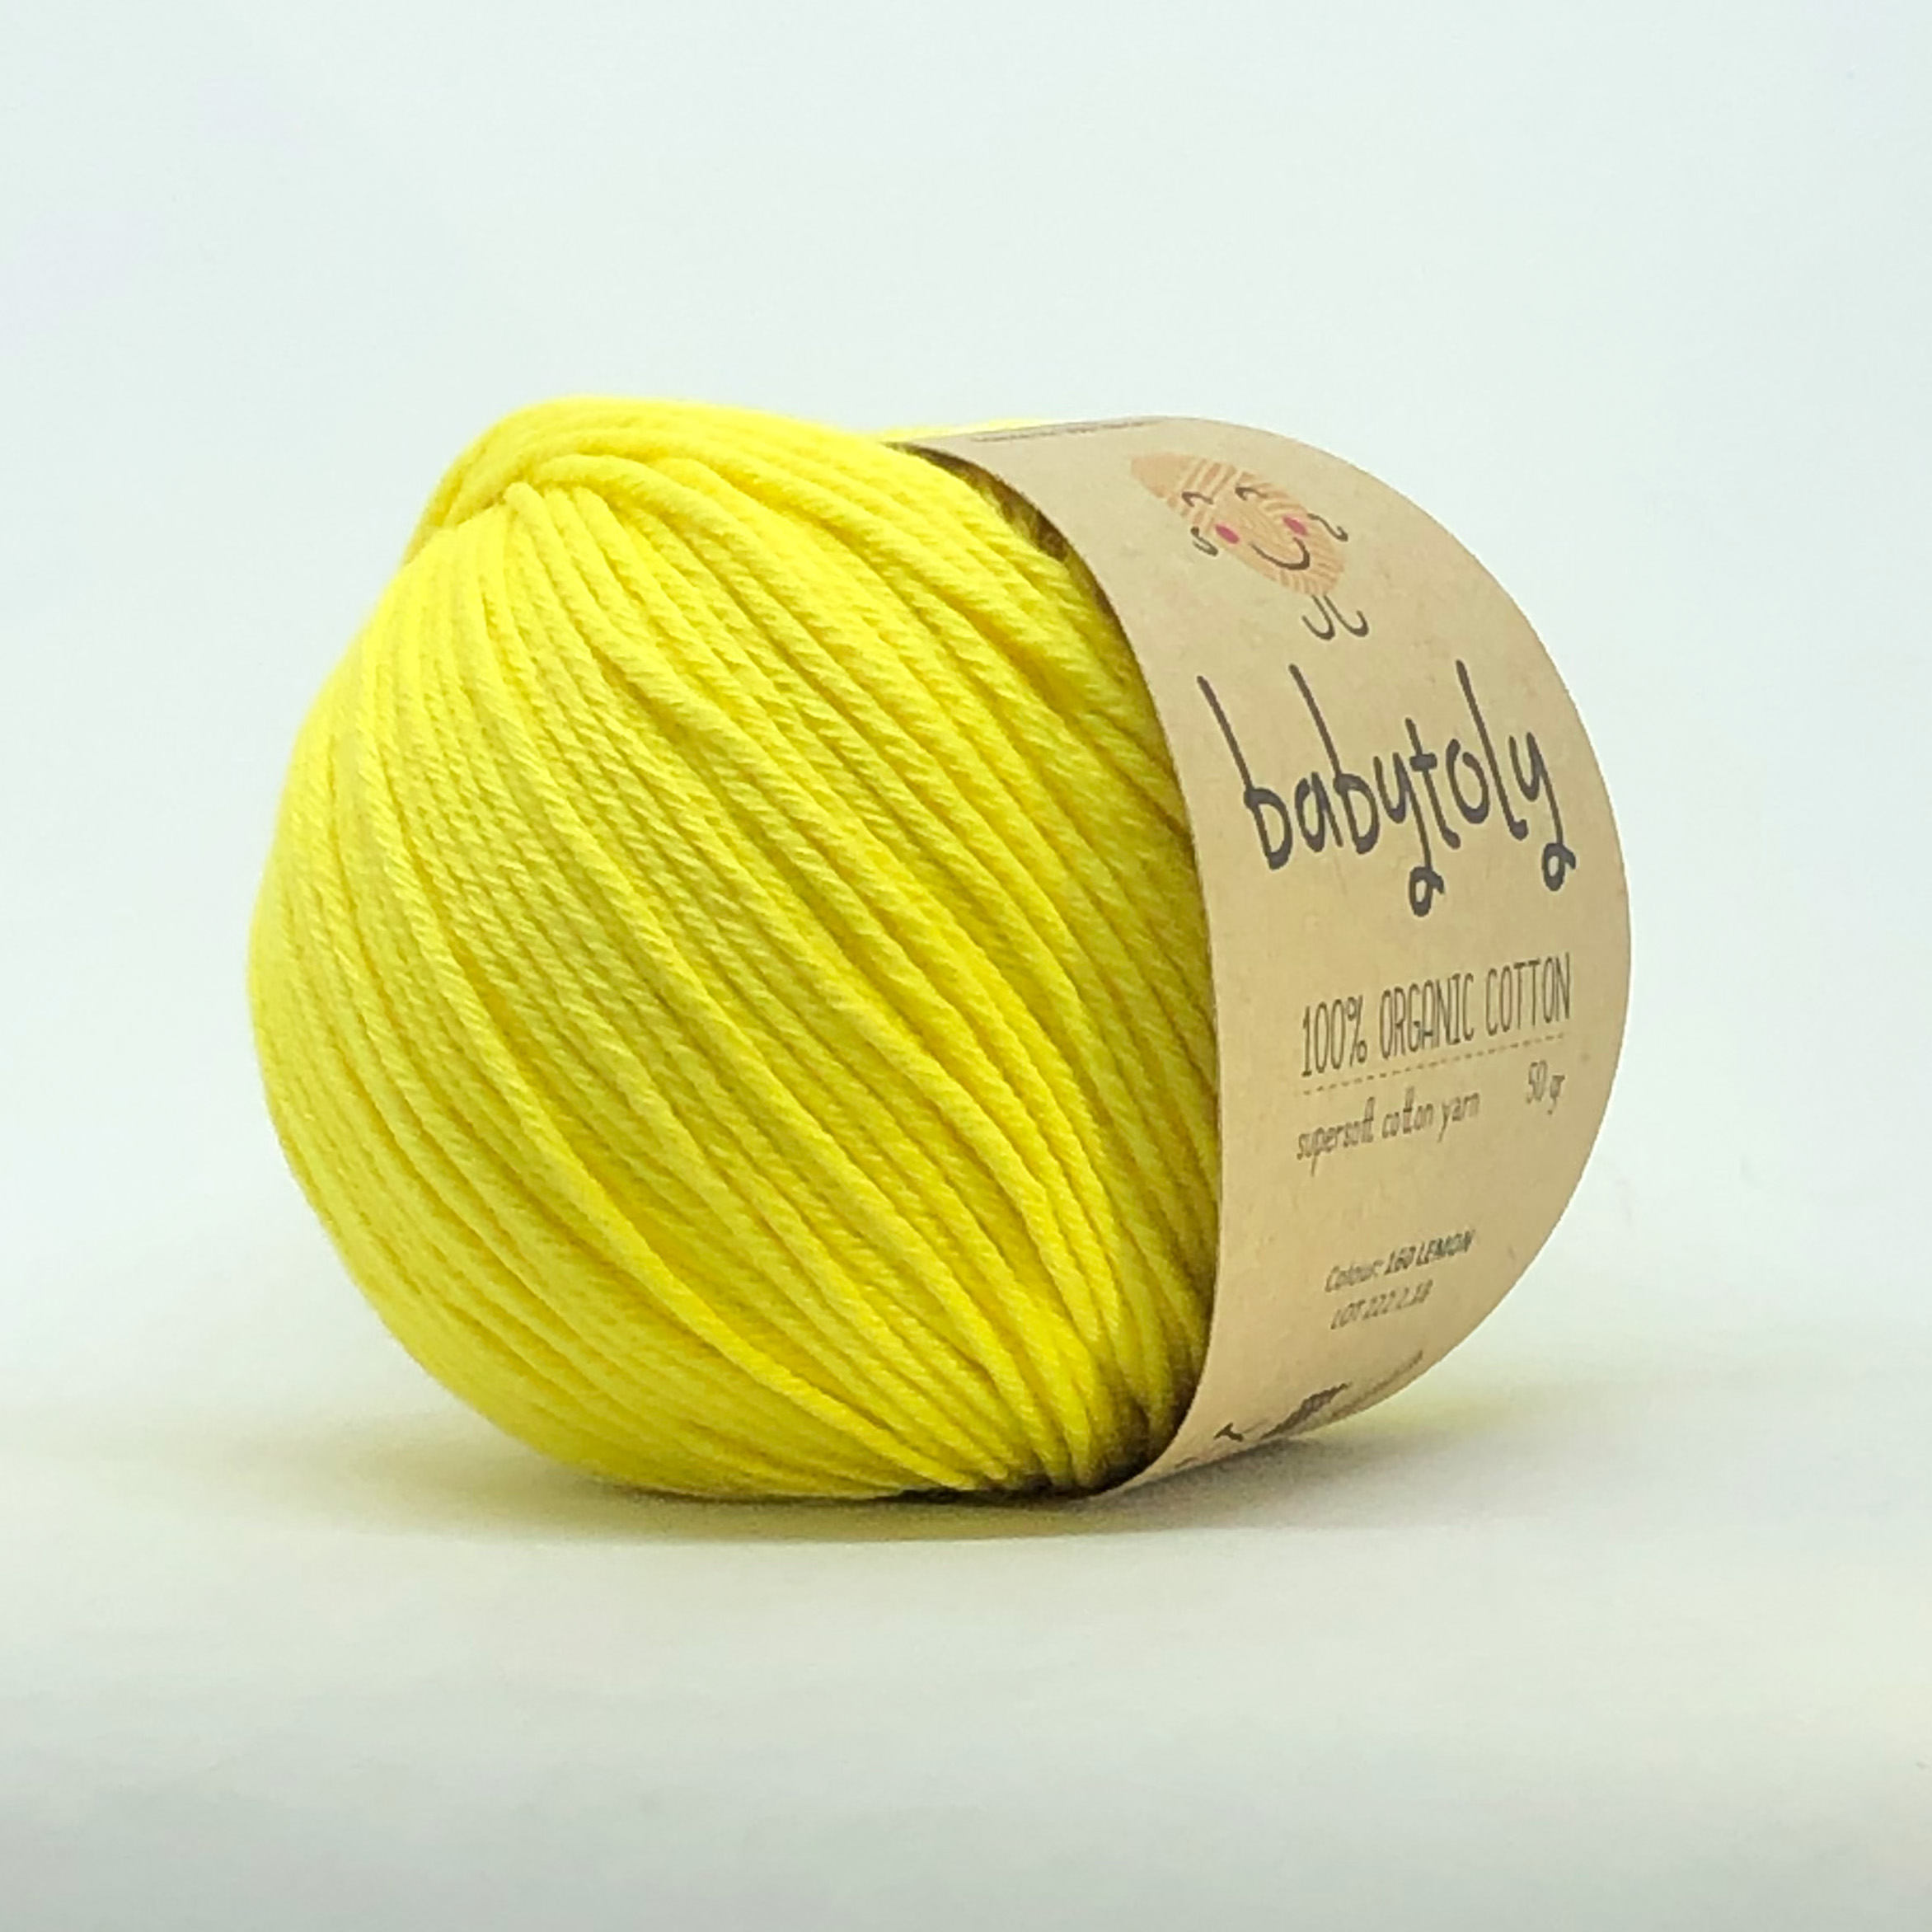 Organic Cotton Yarn - ROSA PINK, 551